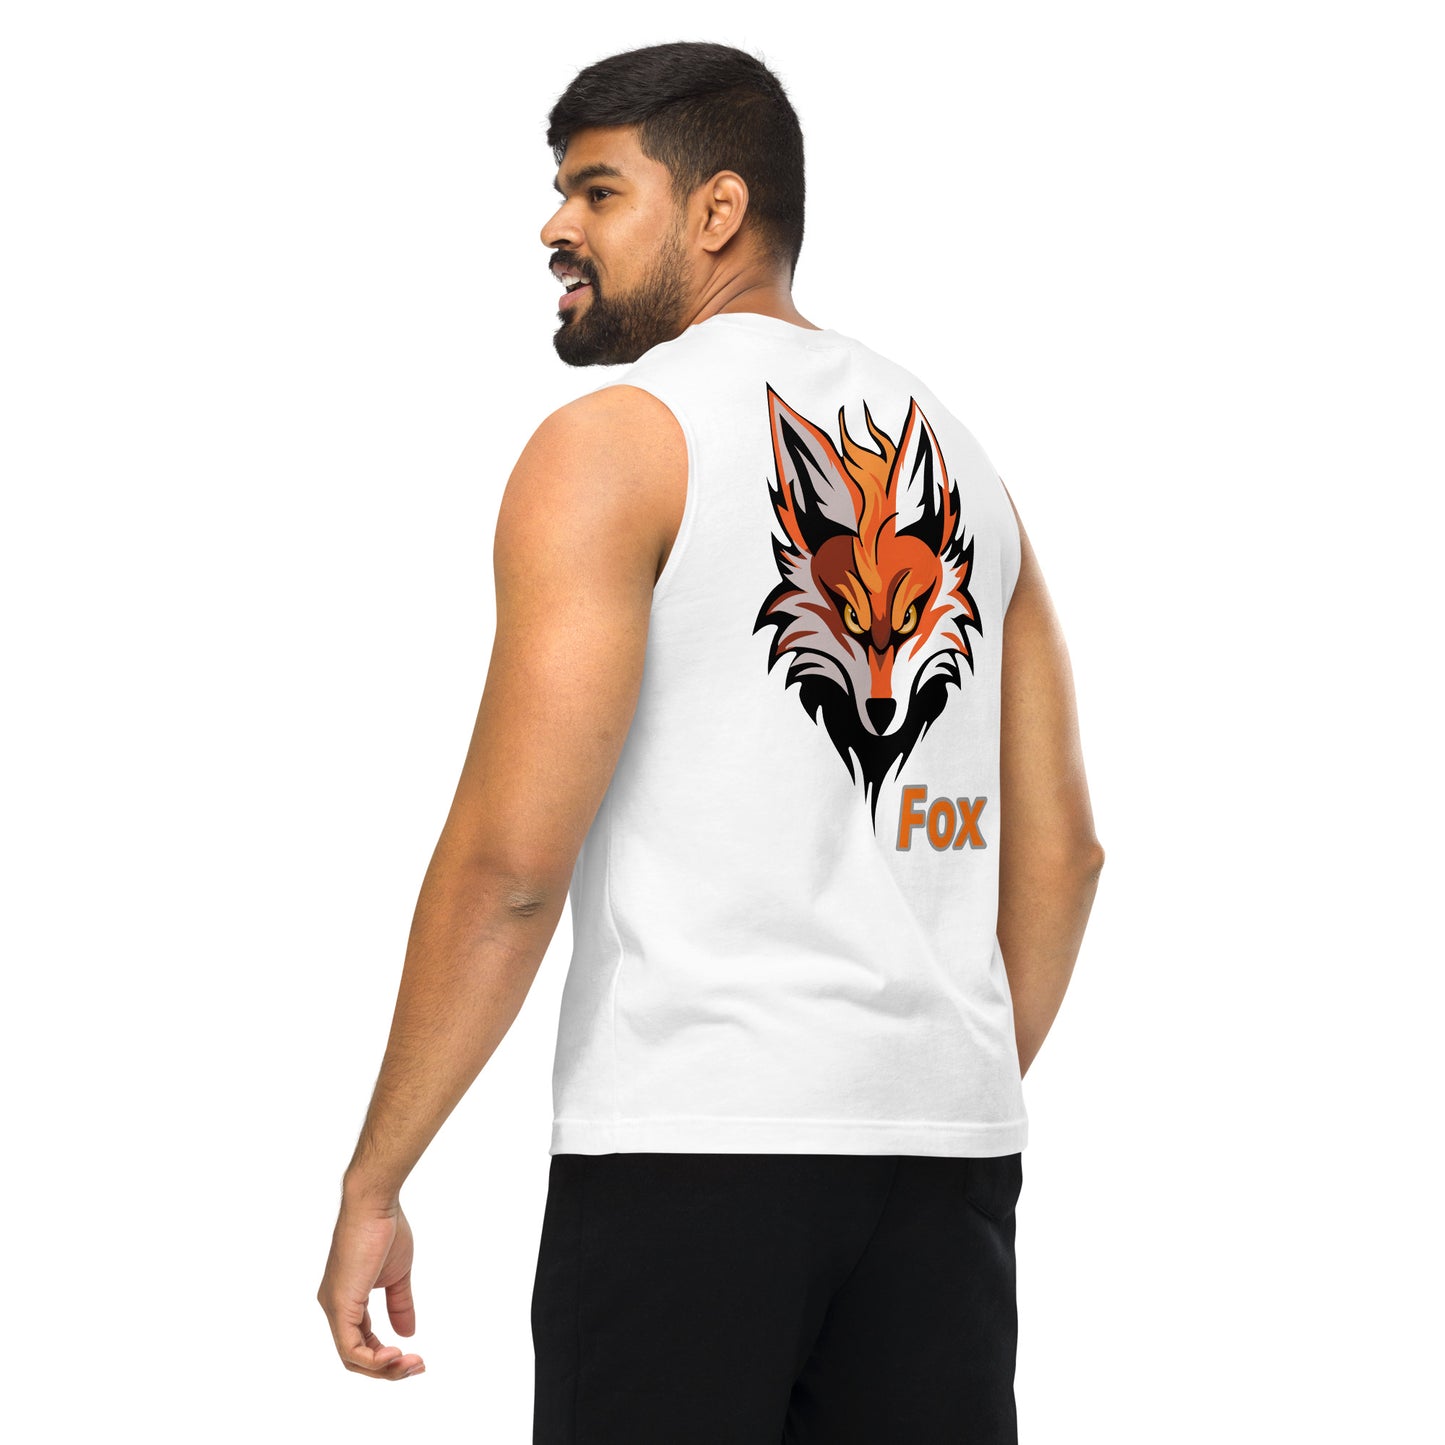 Fox, Muscle Shirt